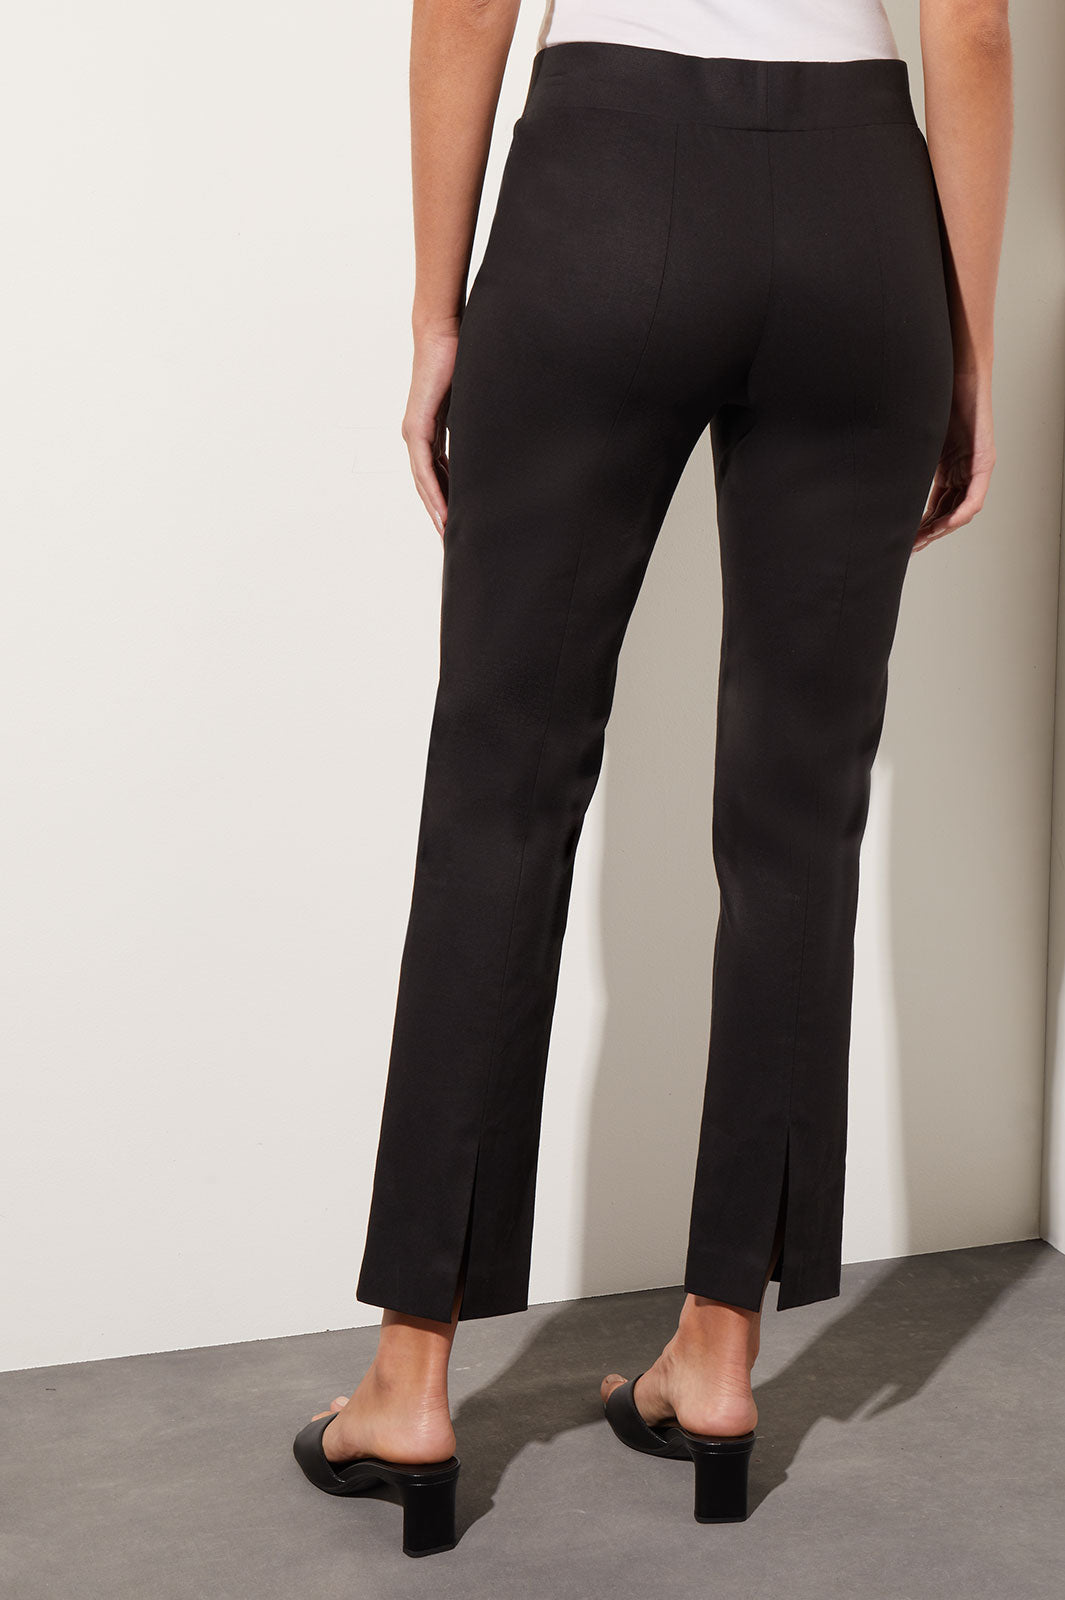 Mens Plus Size Cargo Pants Shorts Loose Casual Cotton Trousers 3/4 Length  Pants | eBay